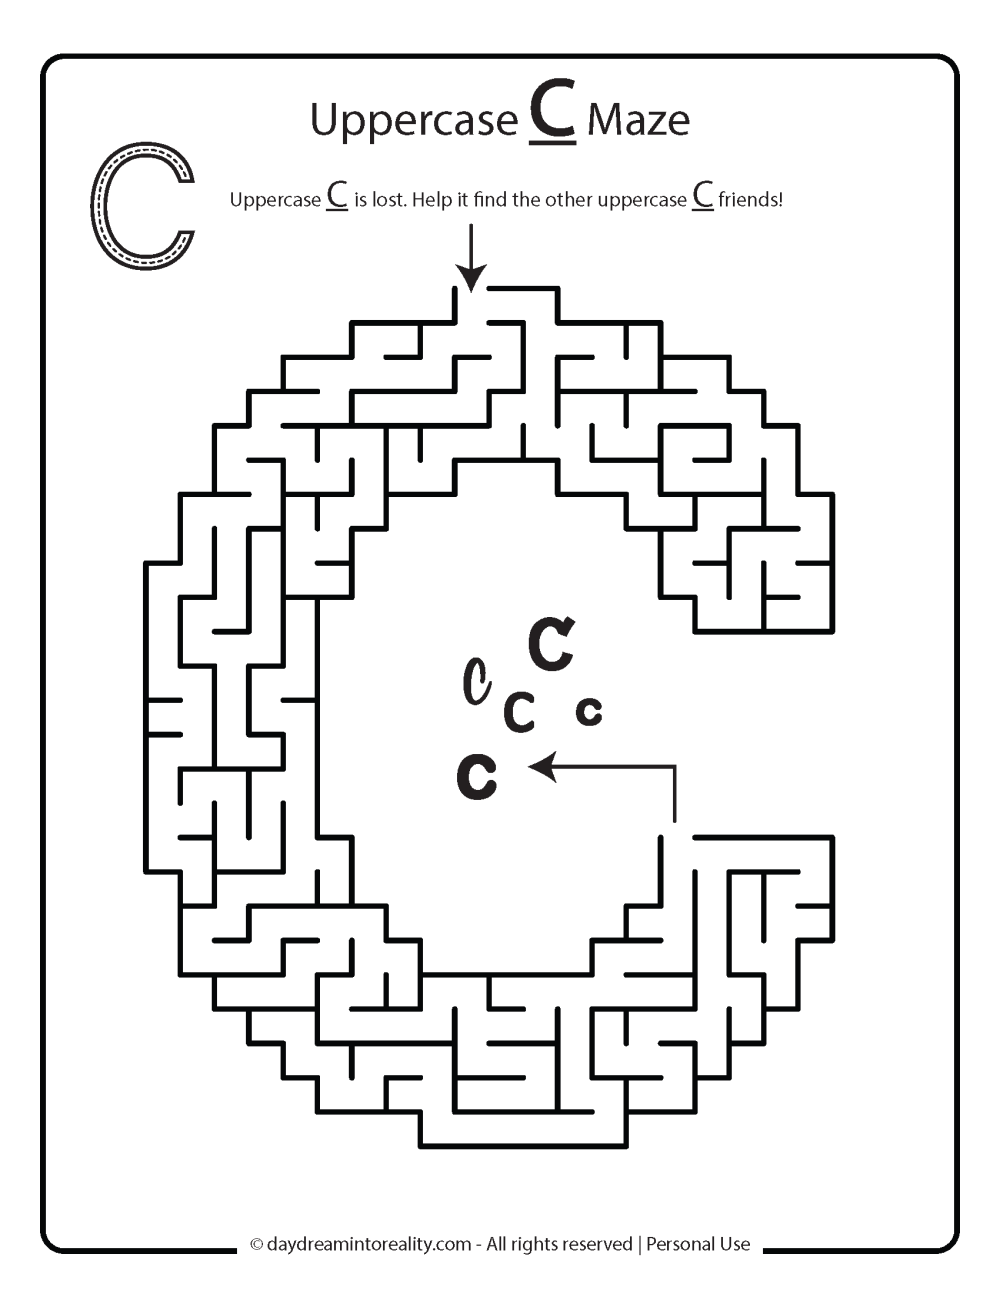 Uppercase C maze worksheet free printable